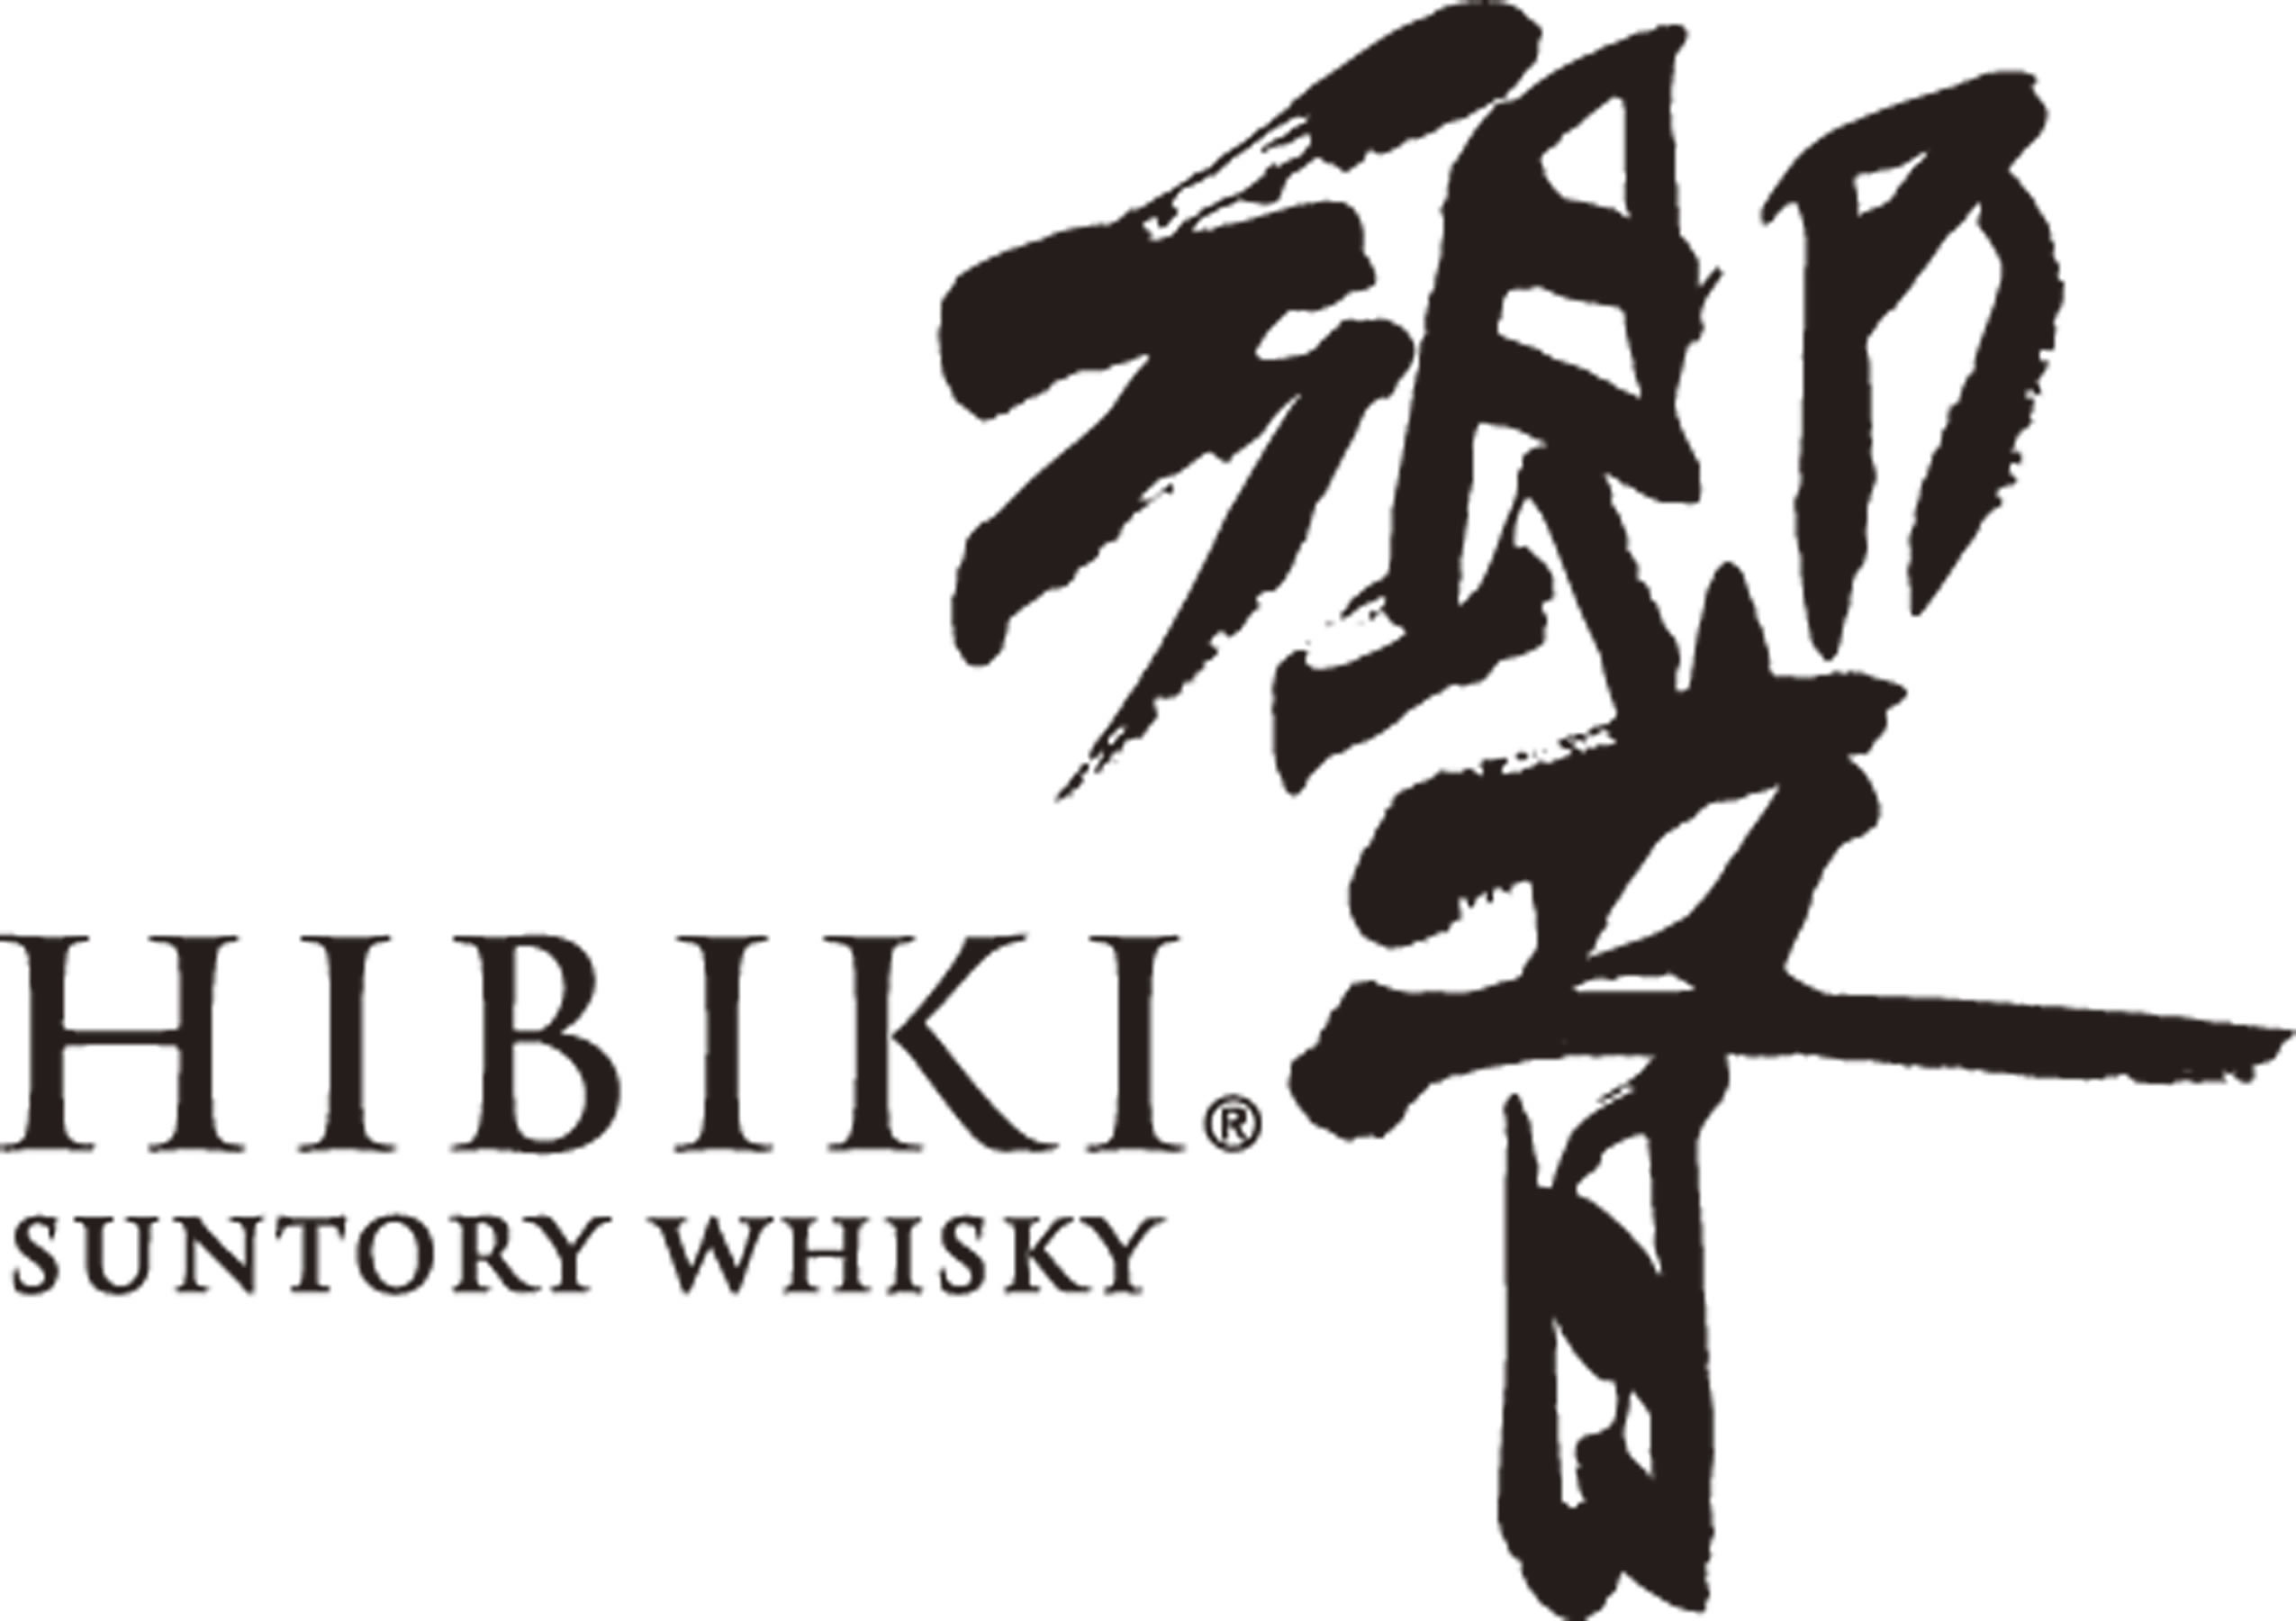 Hibiki logo